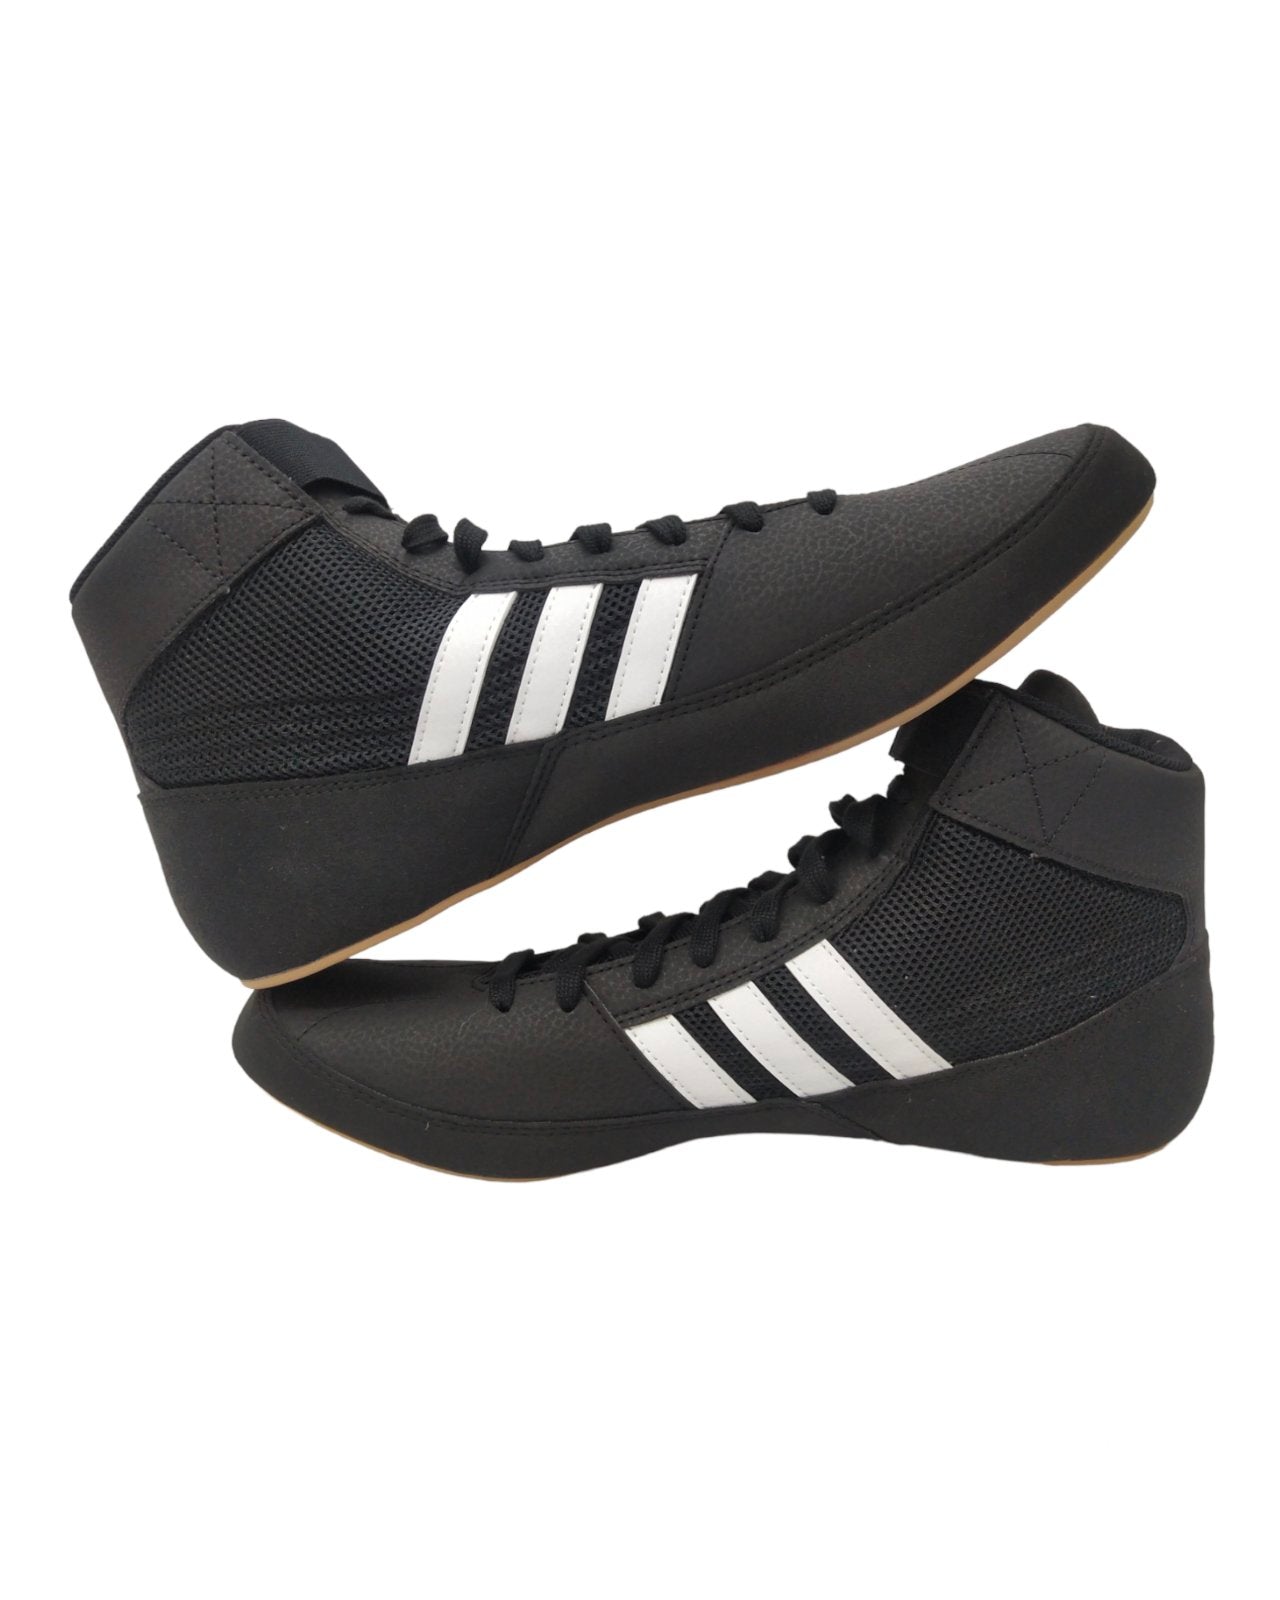 ADIDAS Wrestling Shoes 221-HVC 2 [Black]